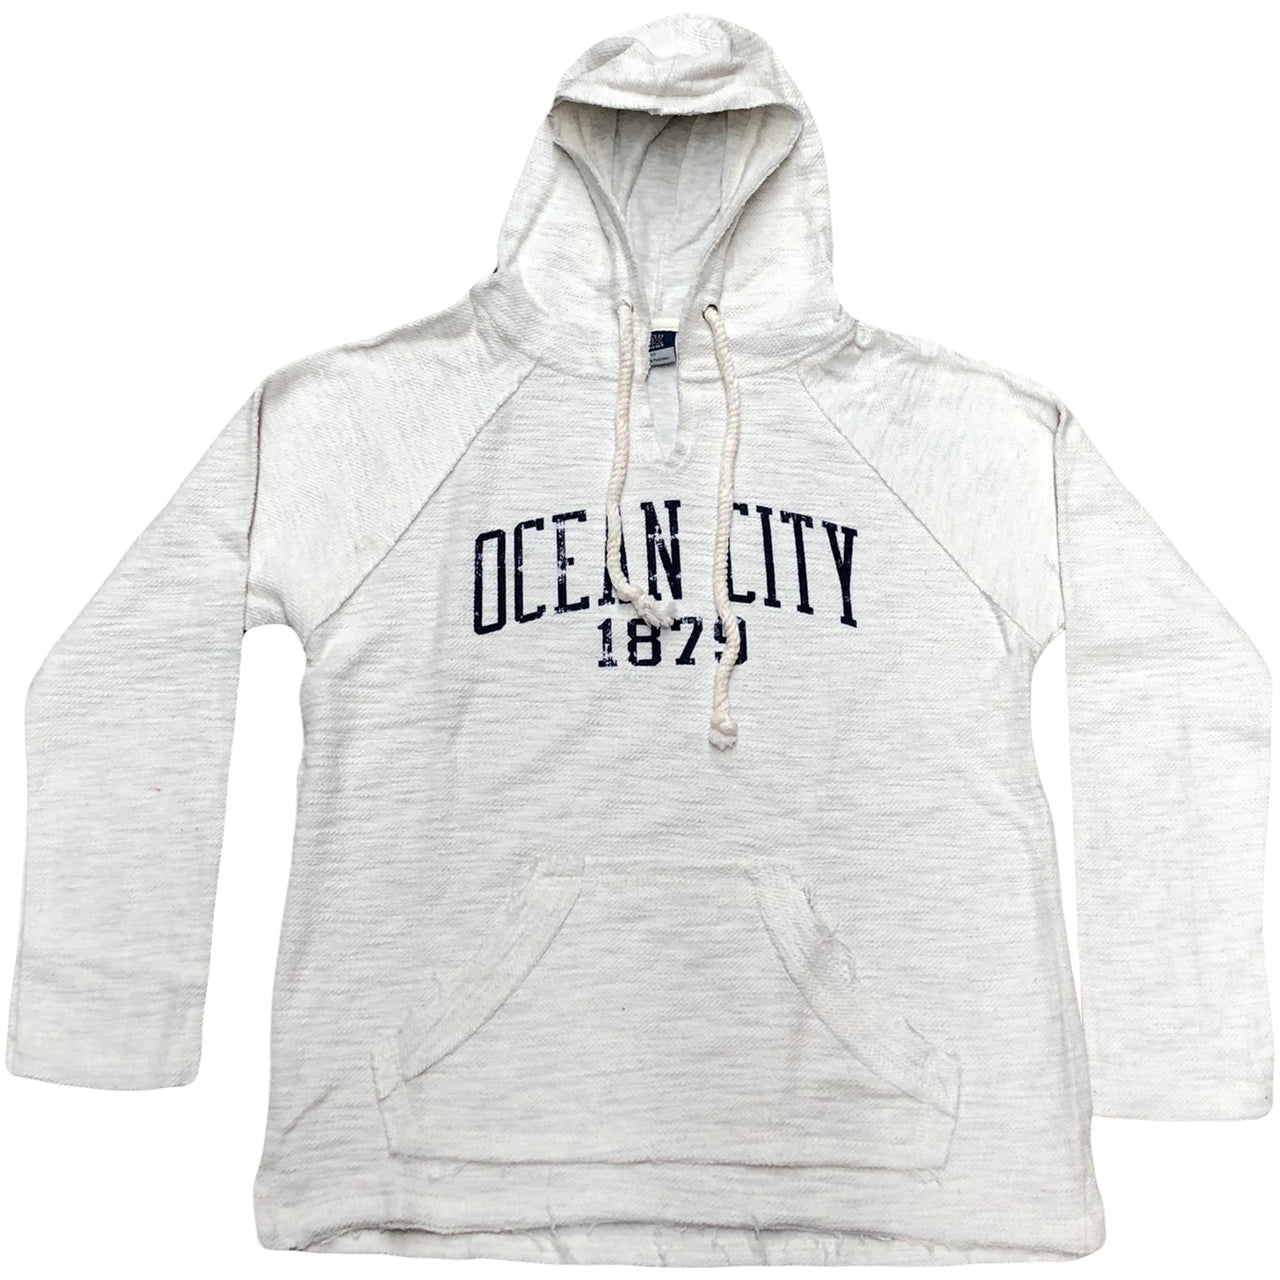 Men's Ocean City New Jersey 1879 Oatmeal Bonfire Baja Pullover Hoodie